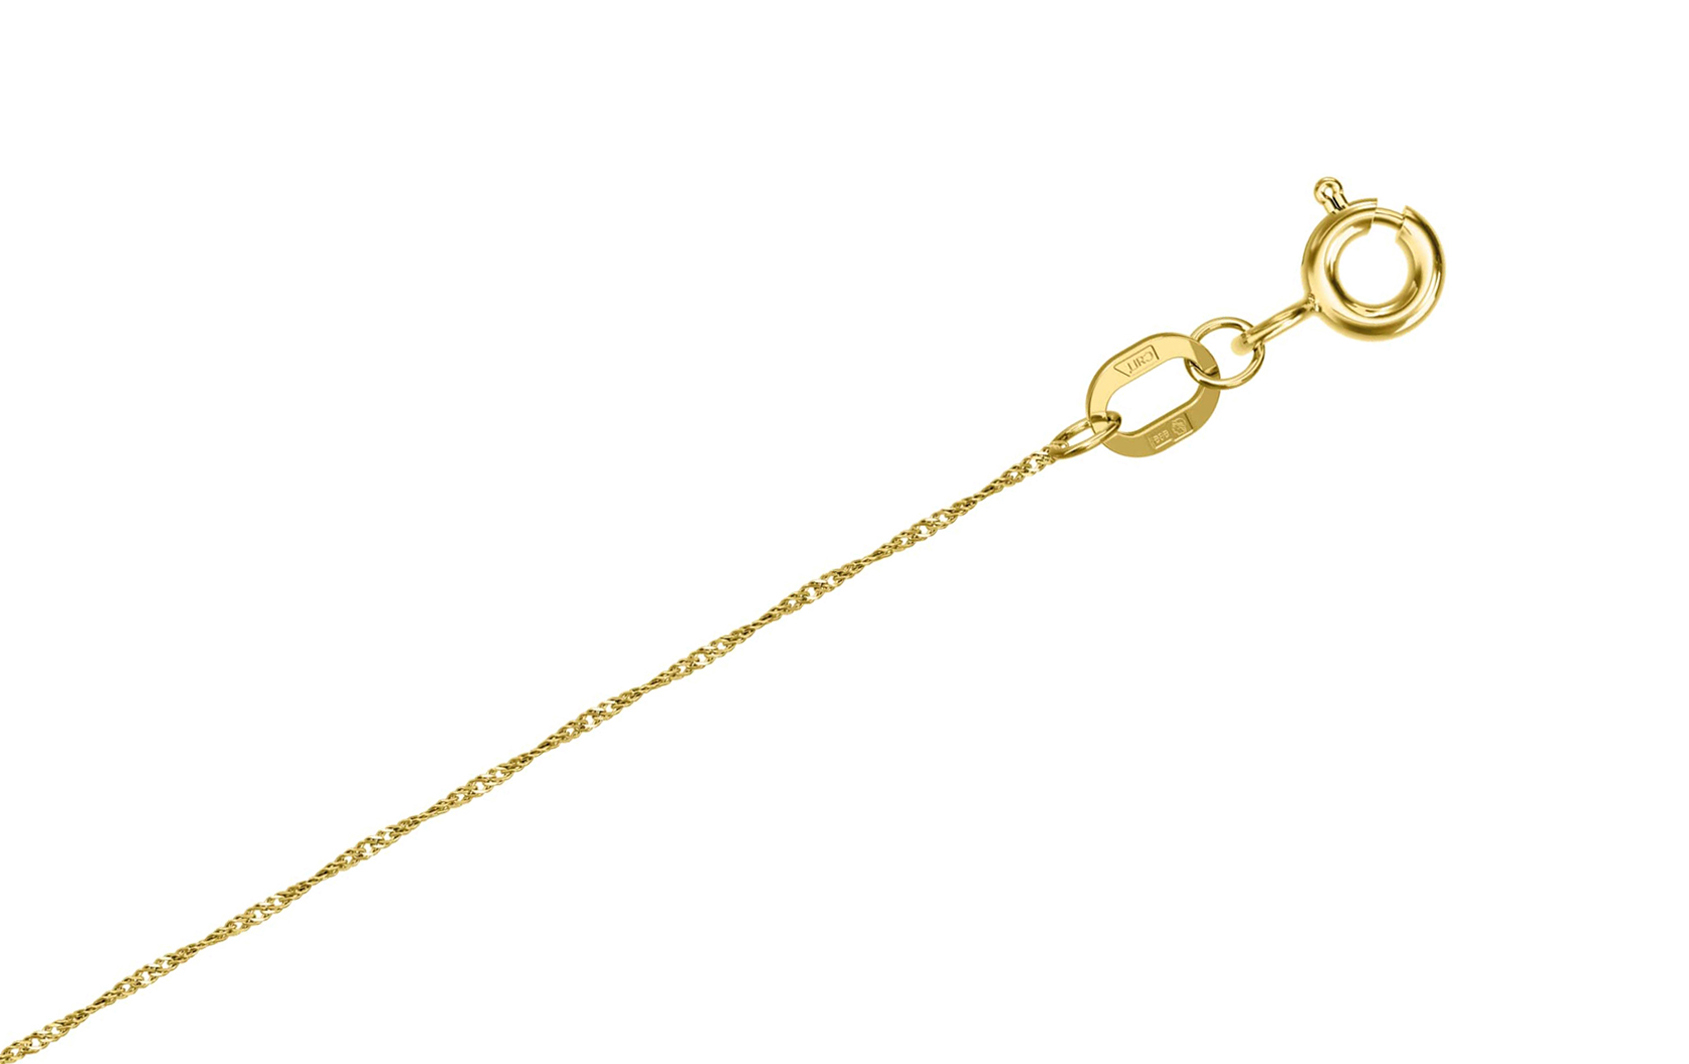 Цепь золотая Krastsvetmet, плетение Сингапур цепь золотая krastsvetmet плетение шарик бочка косичка из 4 х цепочек